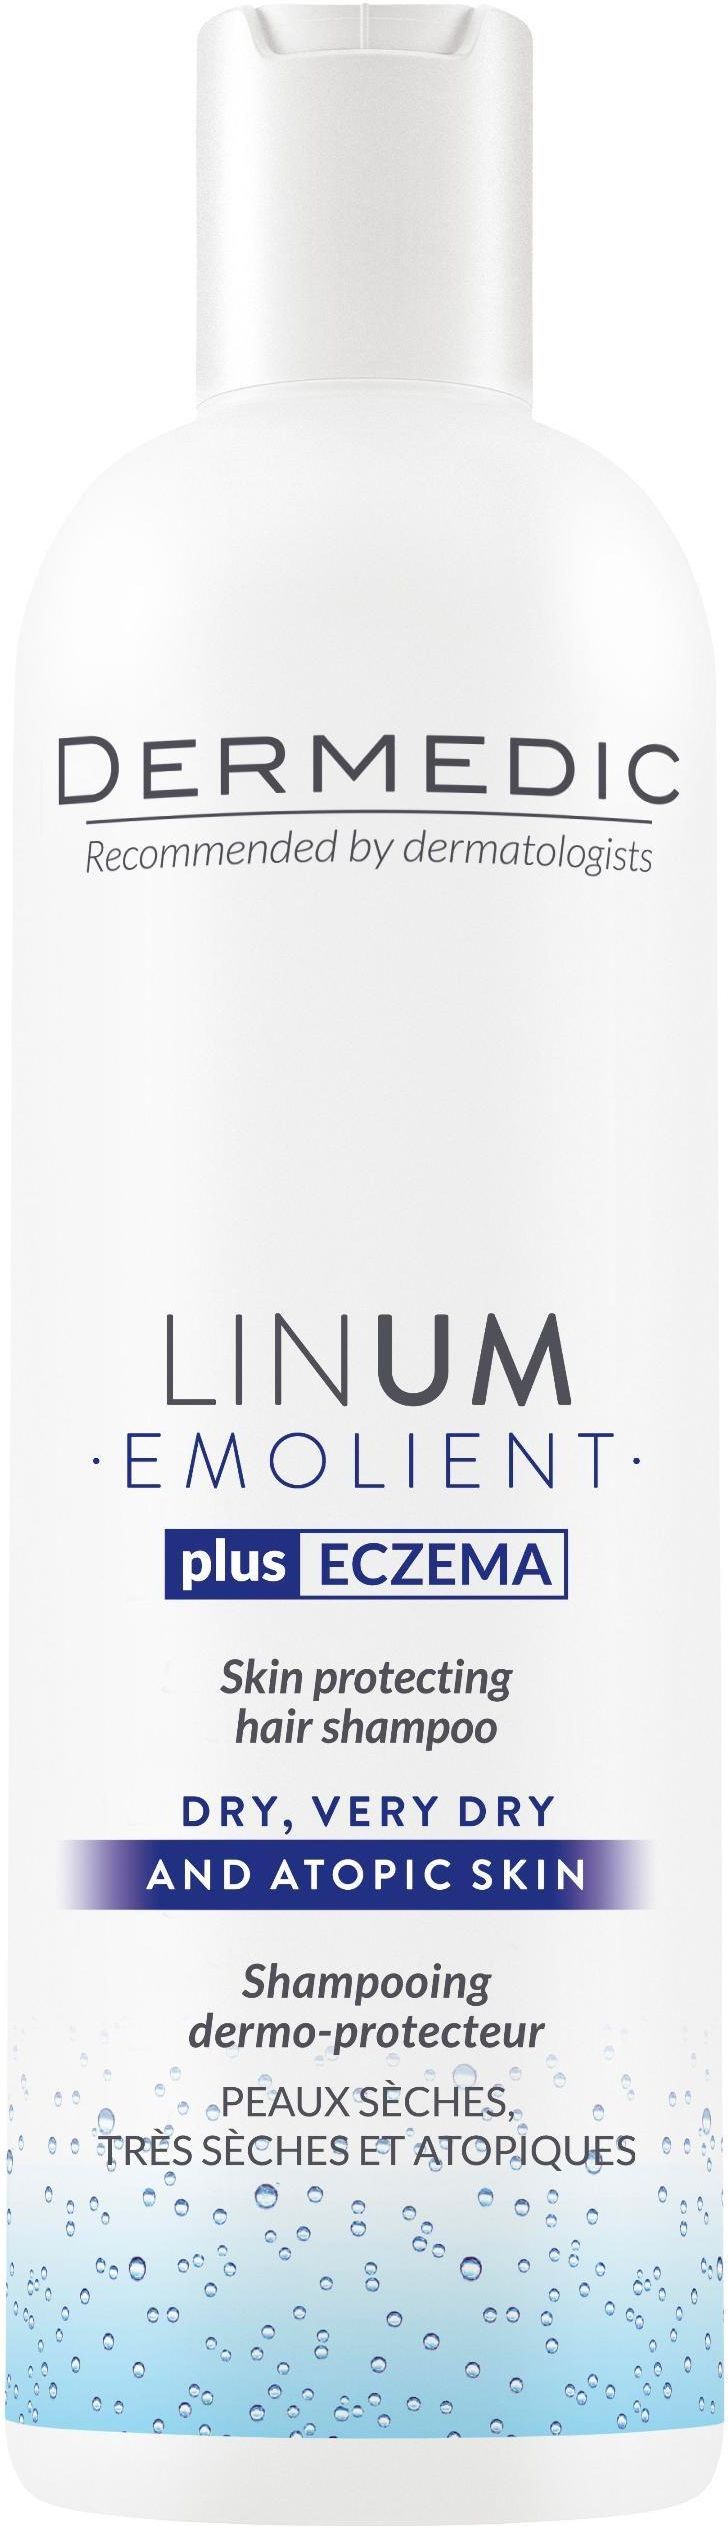 linum dermedic skład szampon